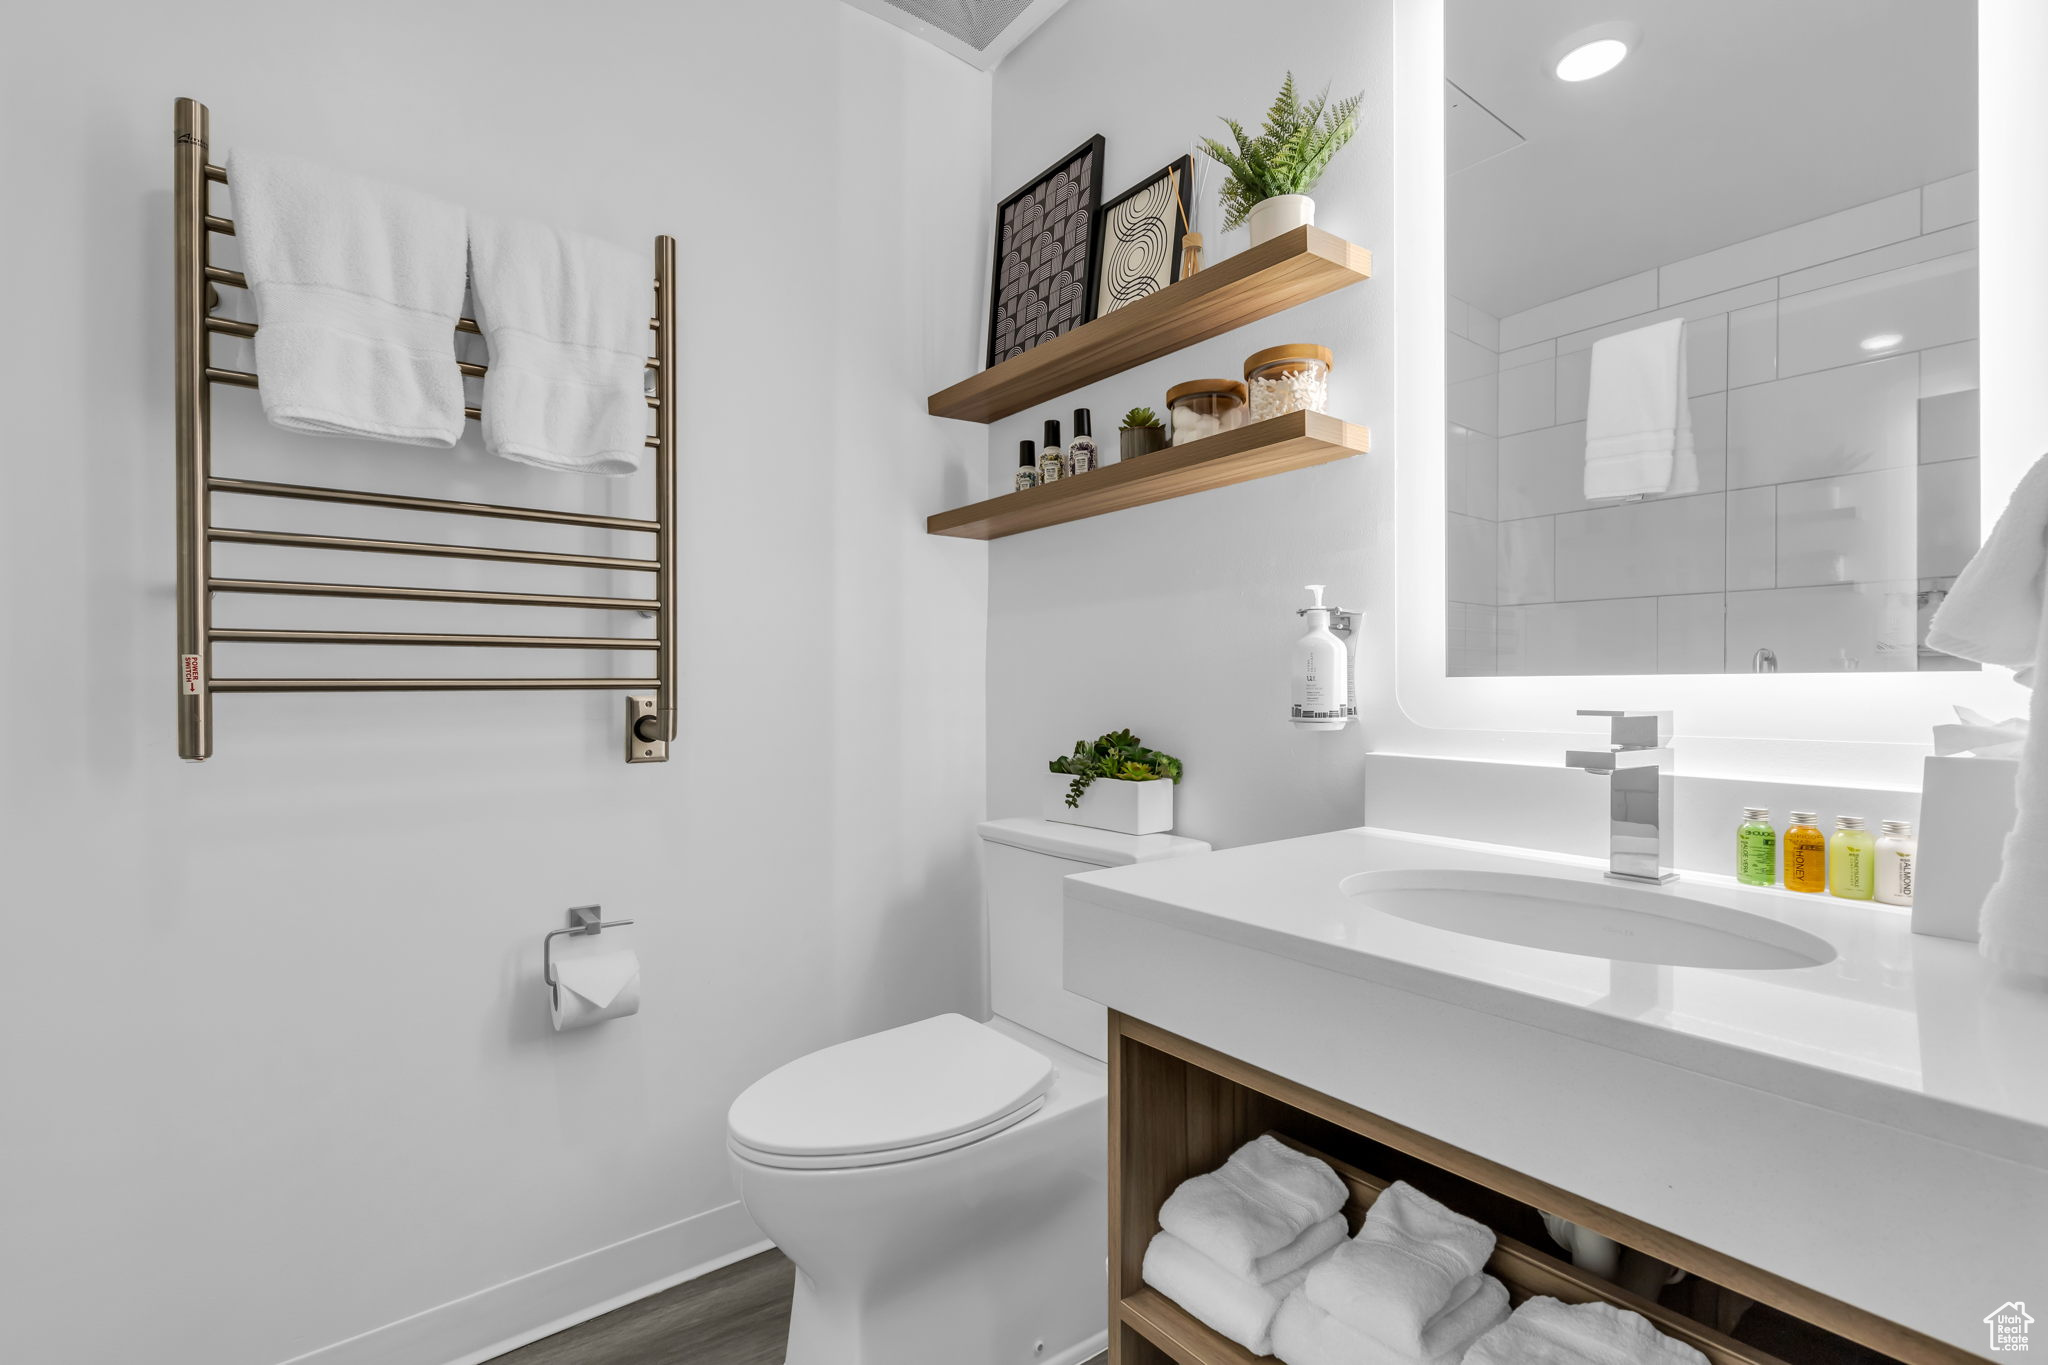 Bathroom with vanity, toilet, hardwood / wood-style flooring, and radiator heating unit